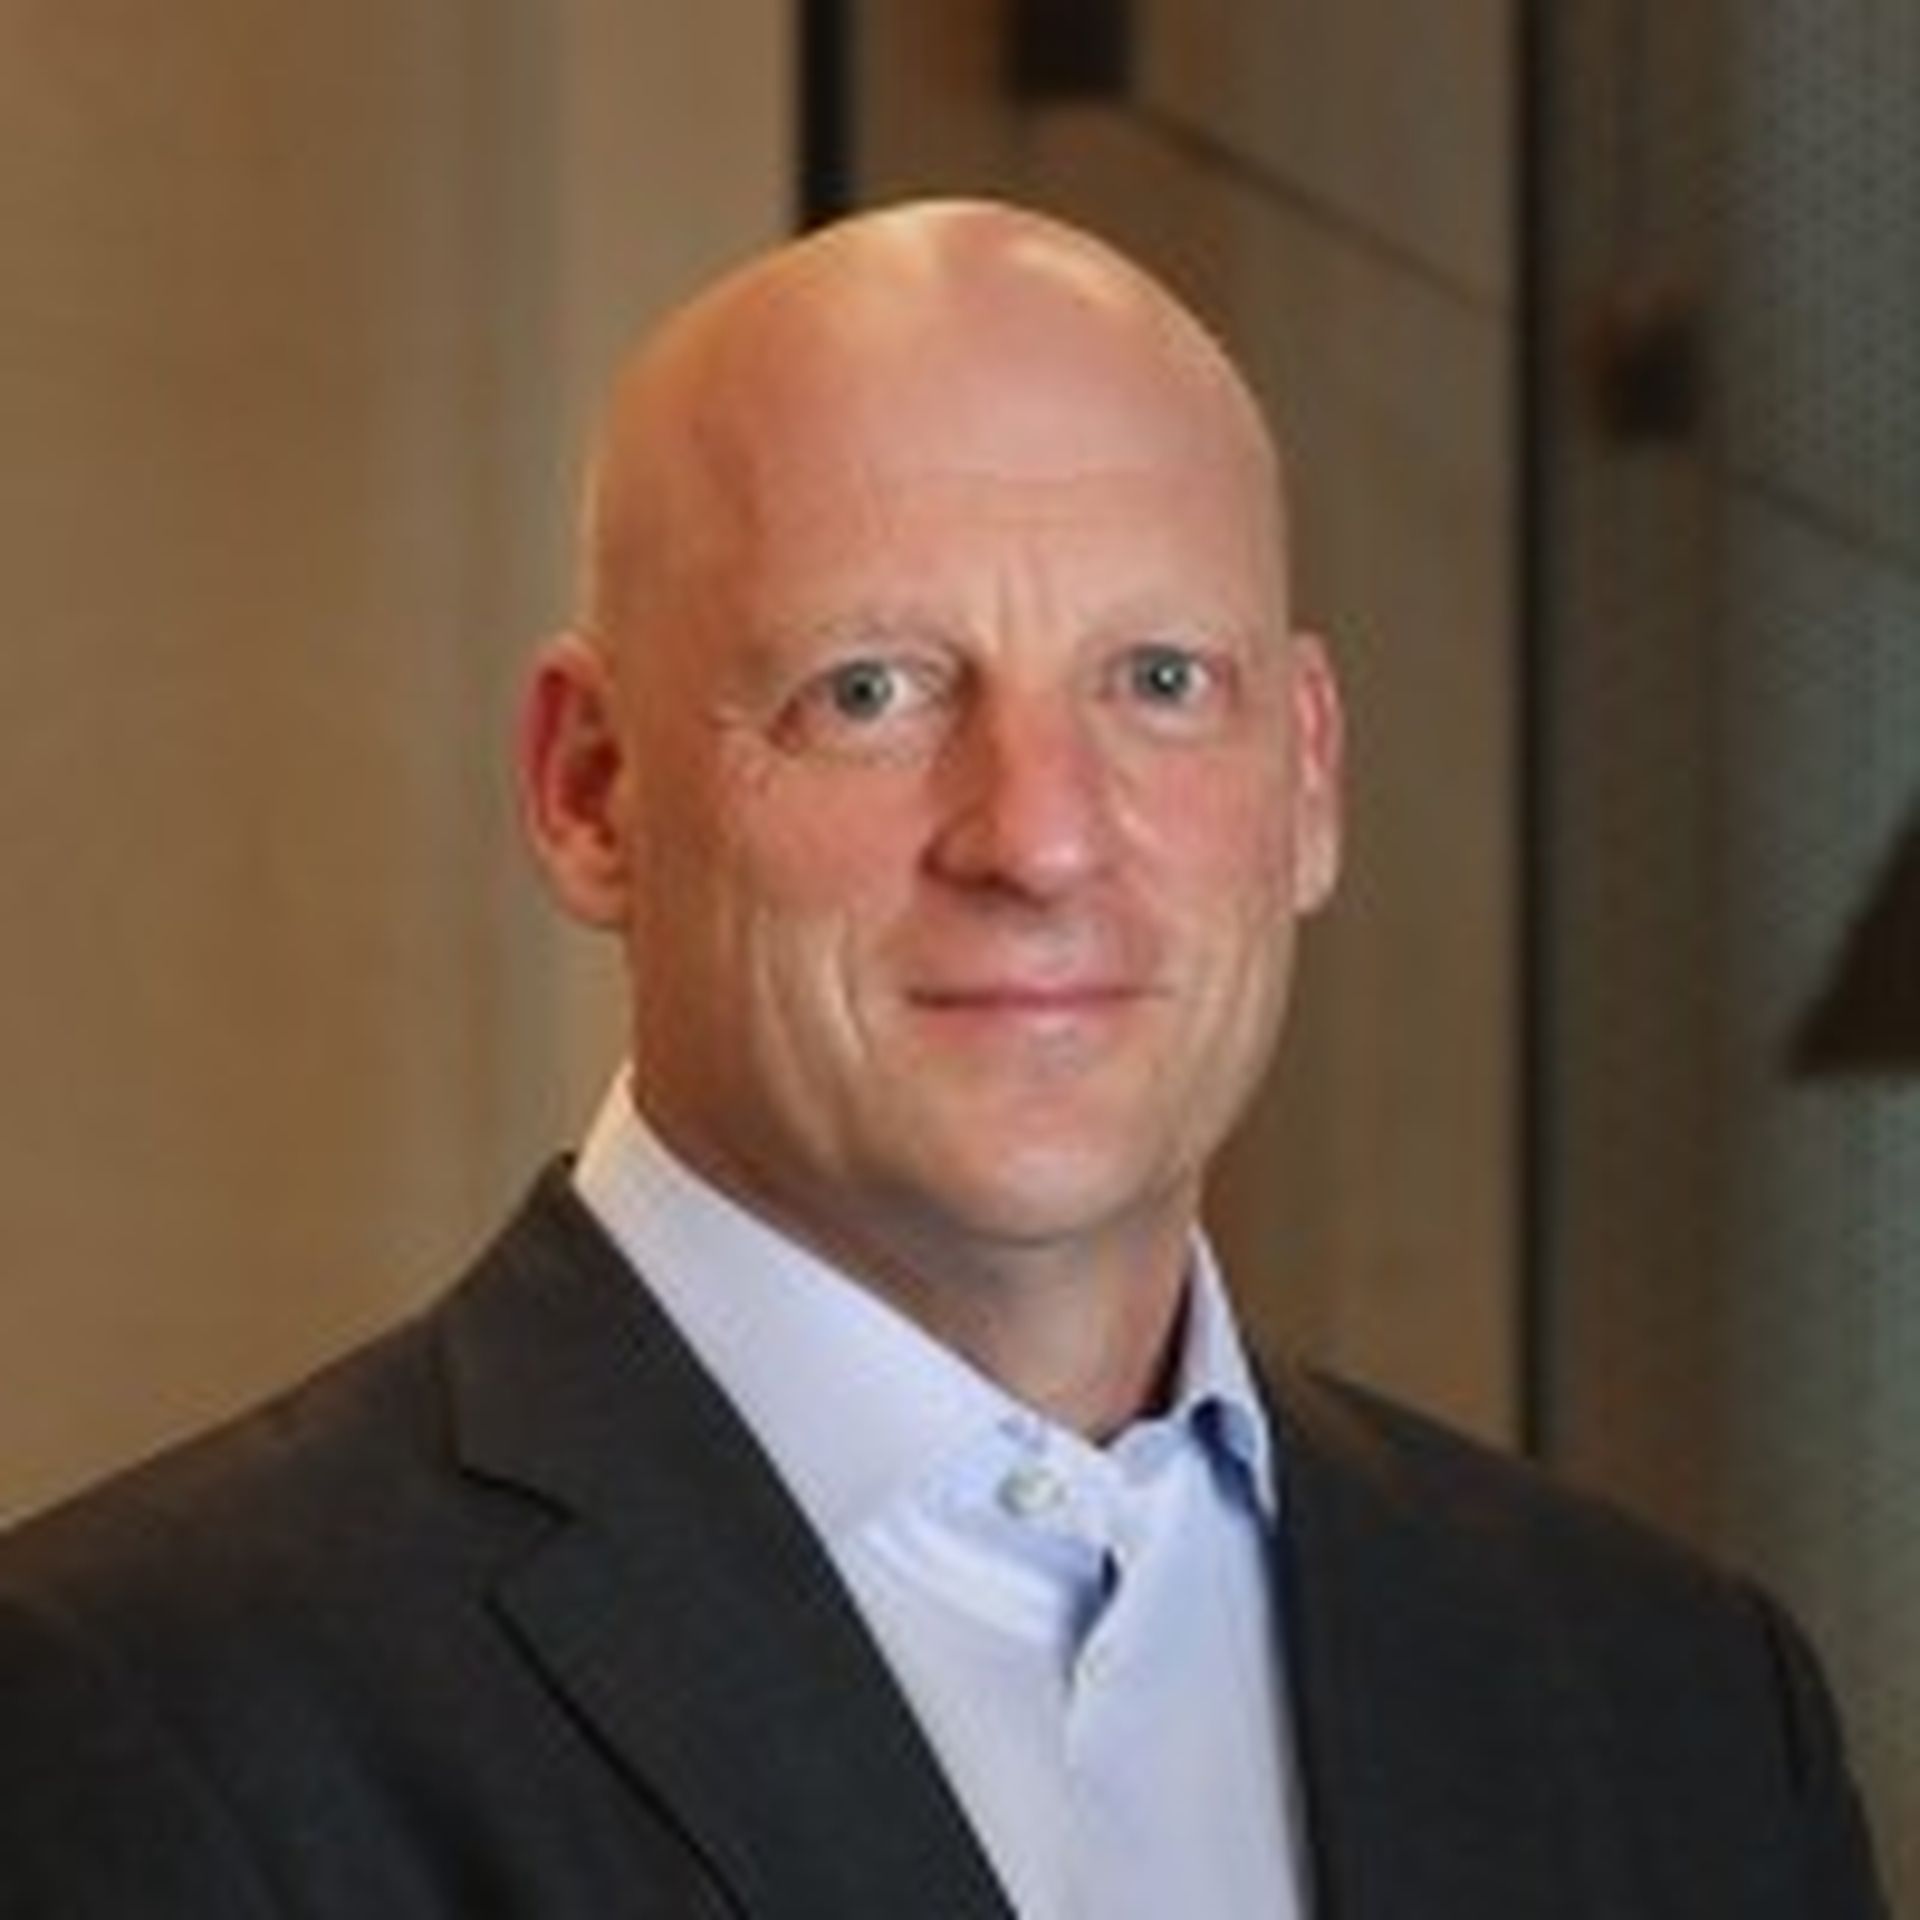 Adam Powick, Deloitte Australia CEO